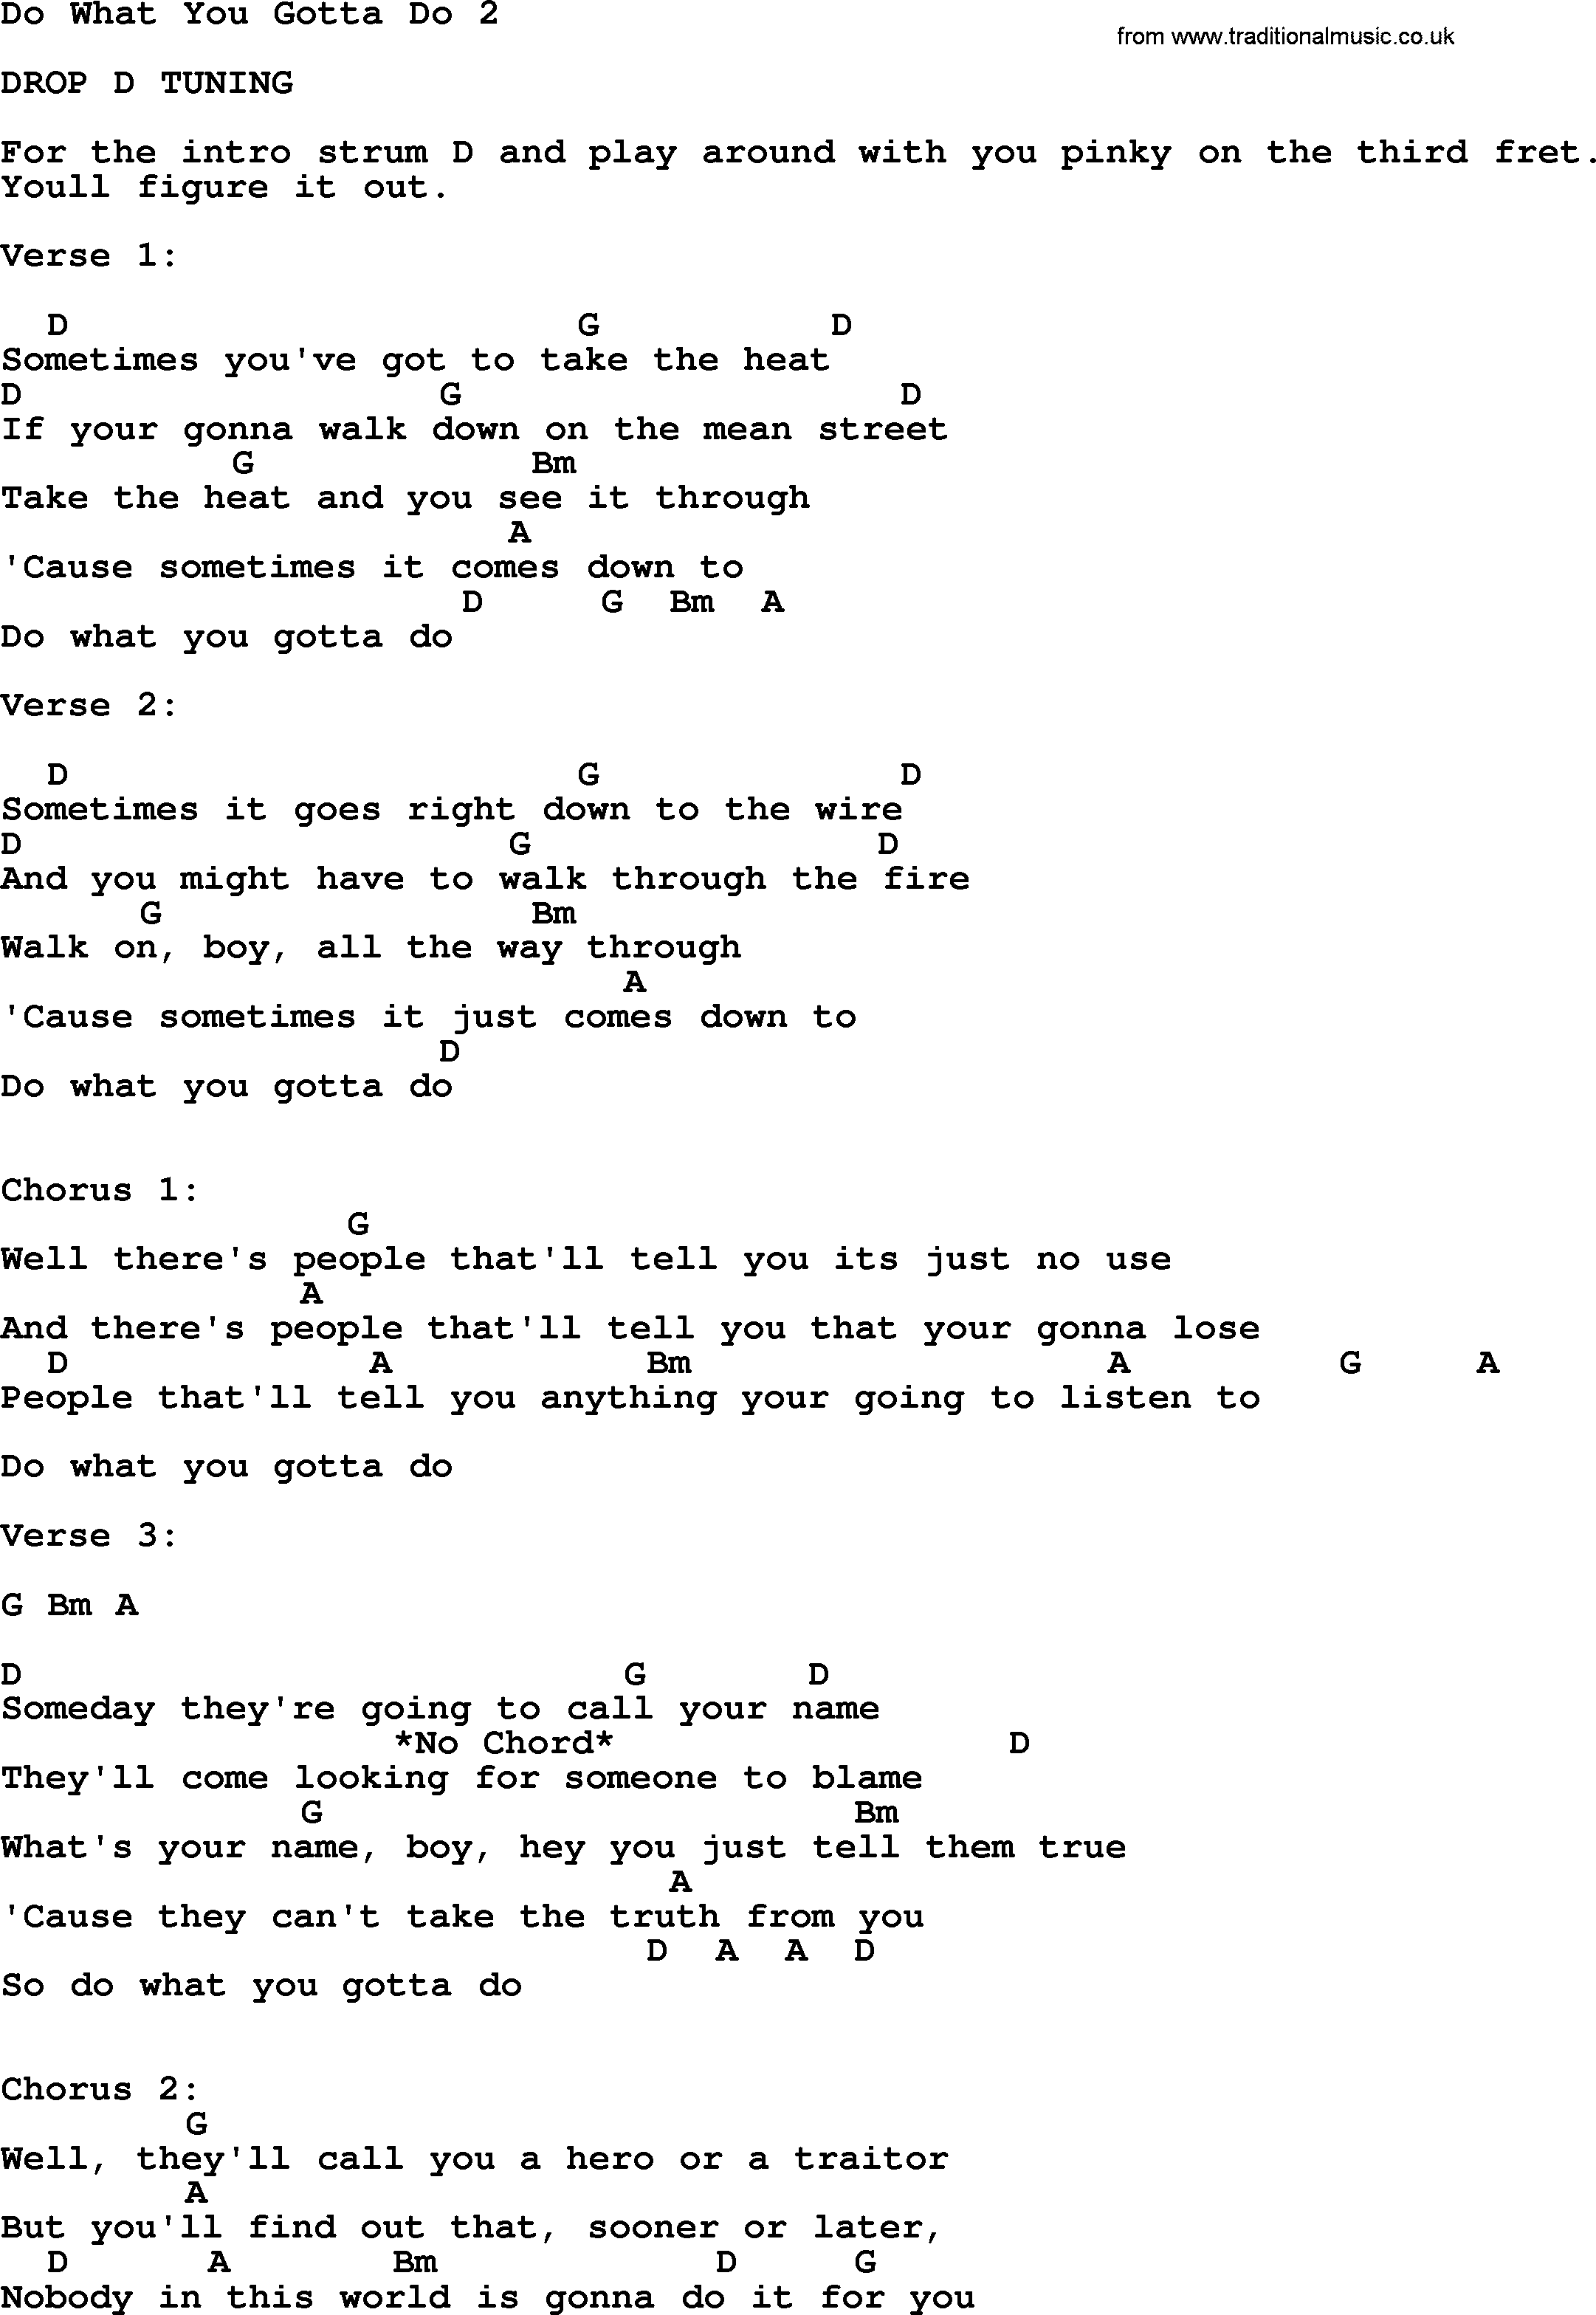 Garth Brooks song: Do What You Gotta Do 2, lyrics and chords